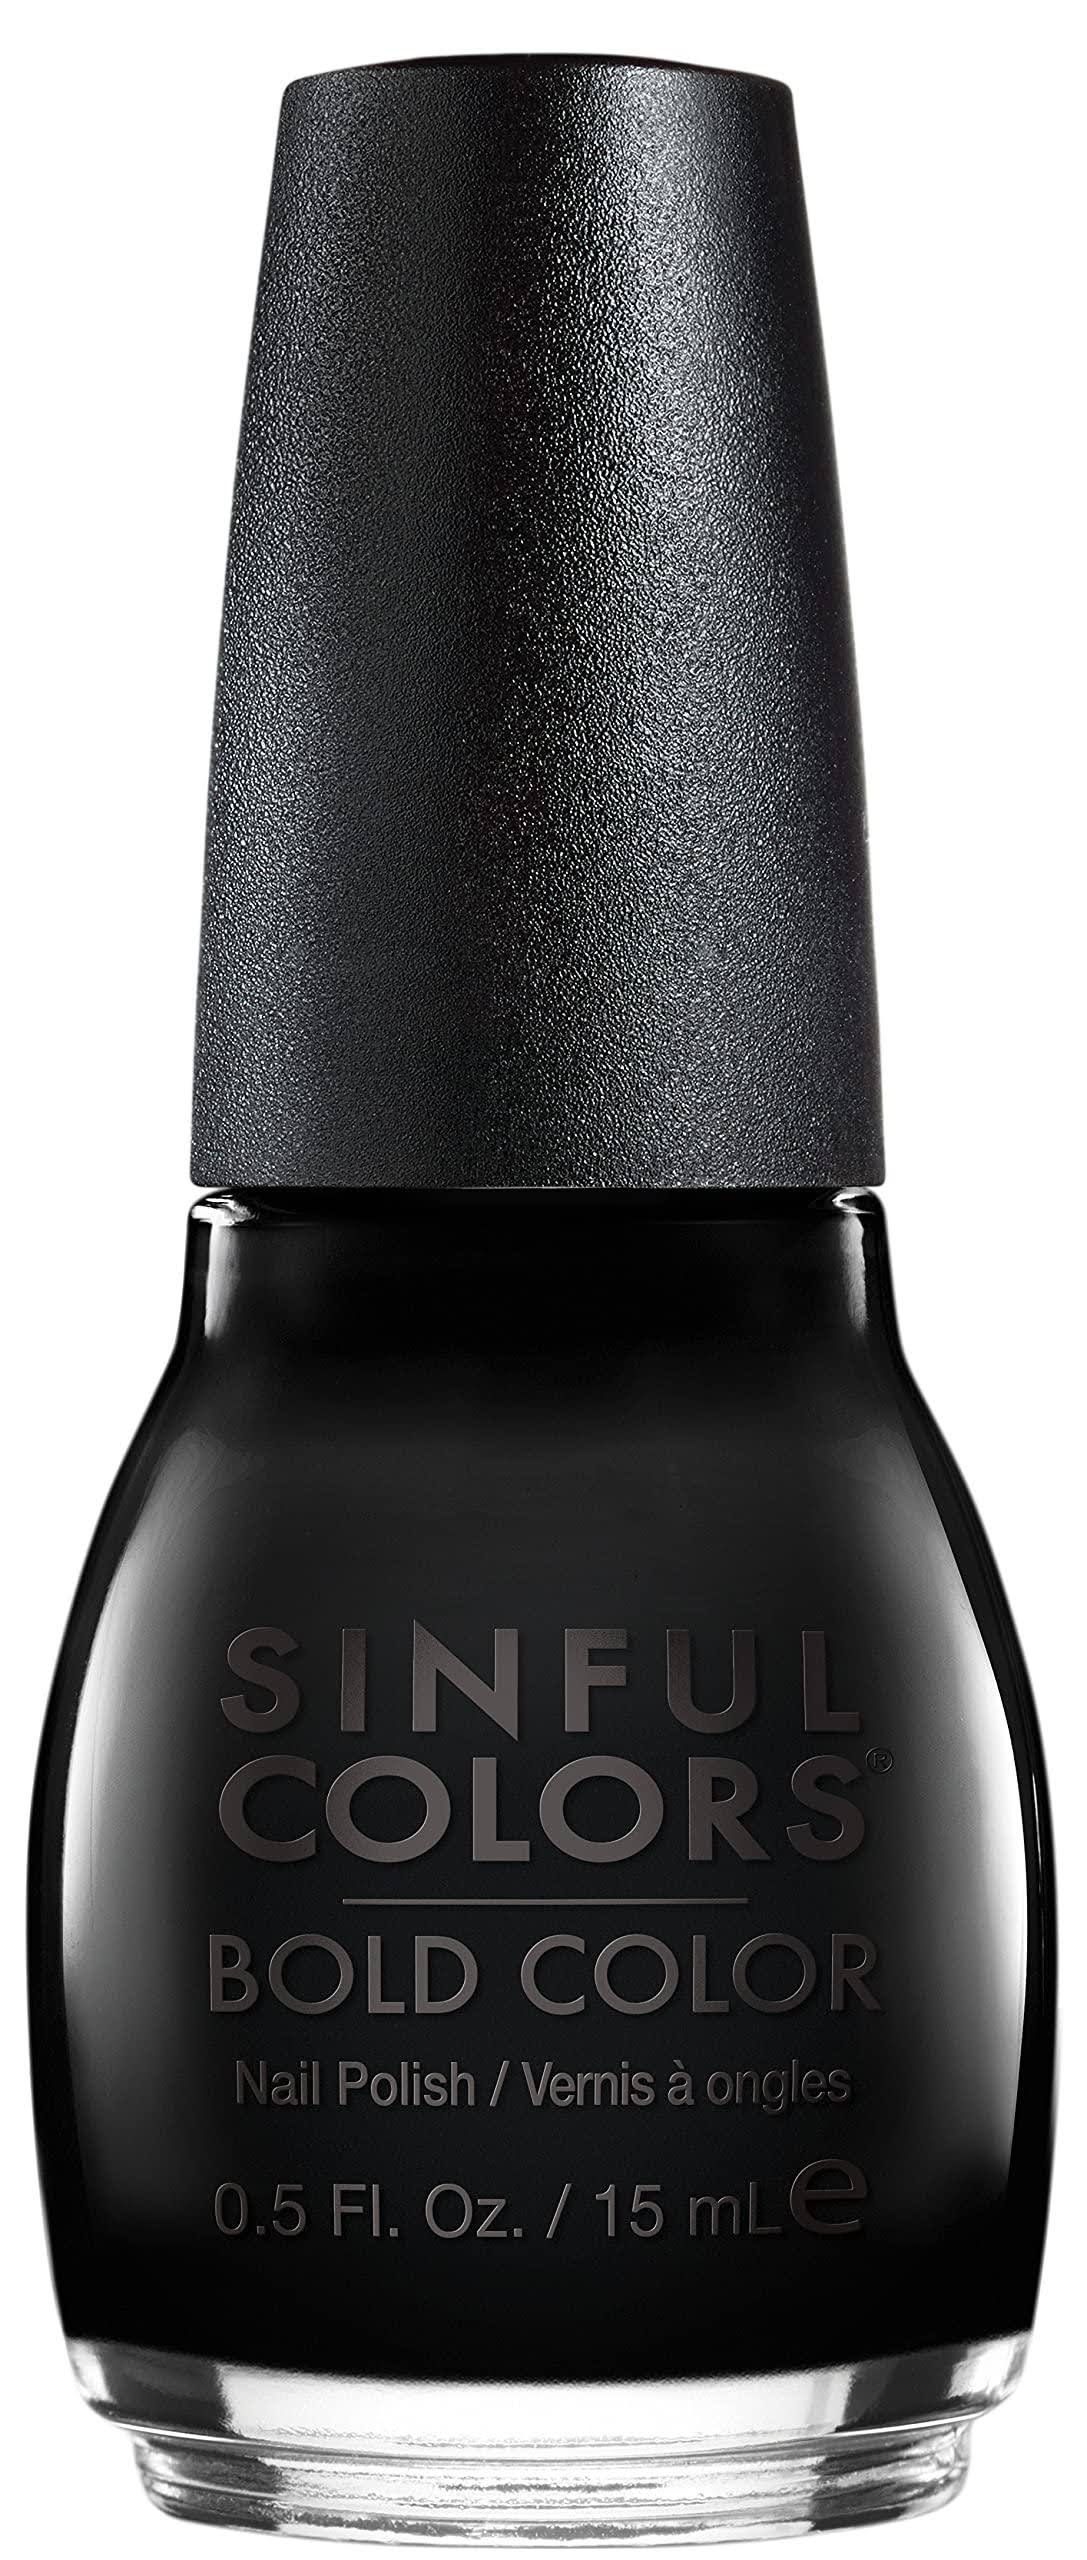 Sinful Colors Professional Nail Enamel - Black On Black 103, 0.5oz